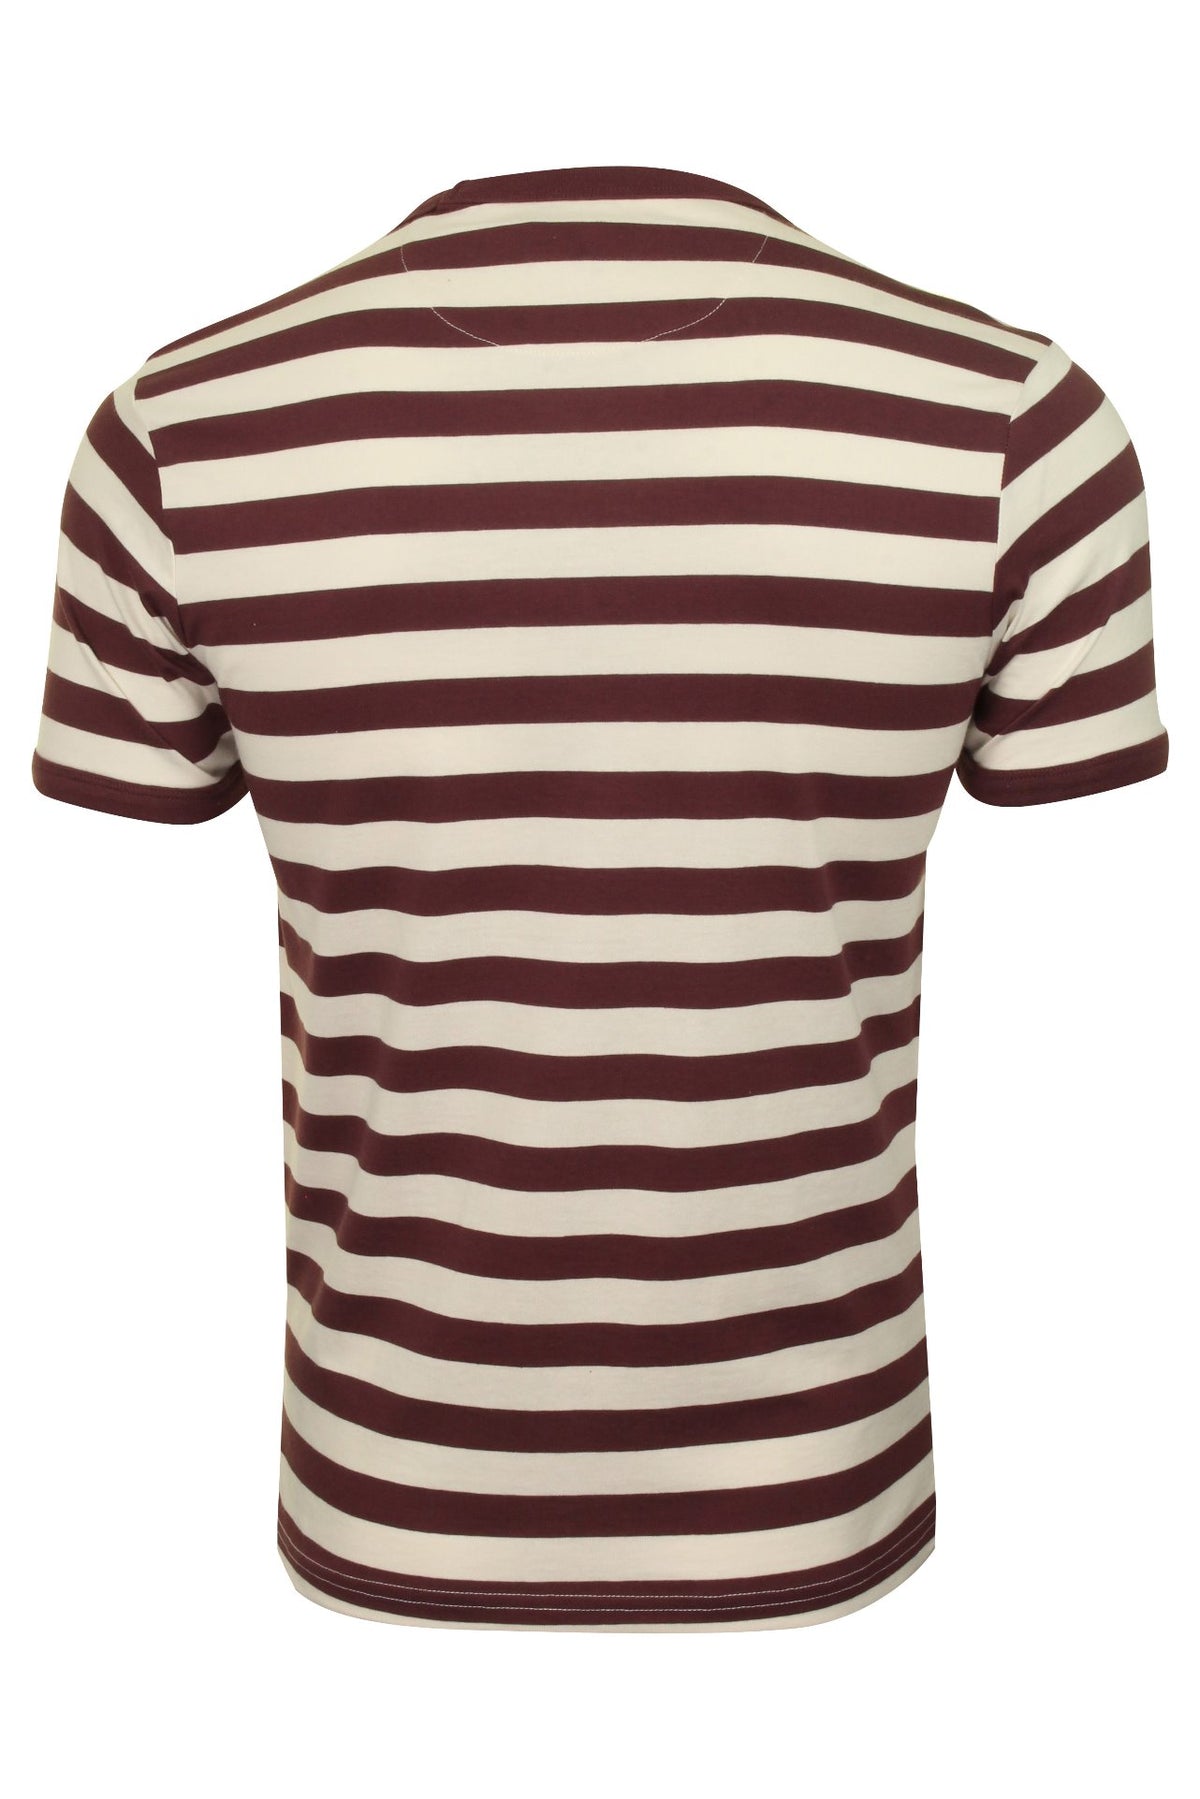 Farah Mens T-Shirt 'Belgrove Stripe', 03, F4Kf8066, Farah Red/Ecru